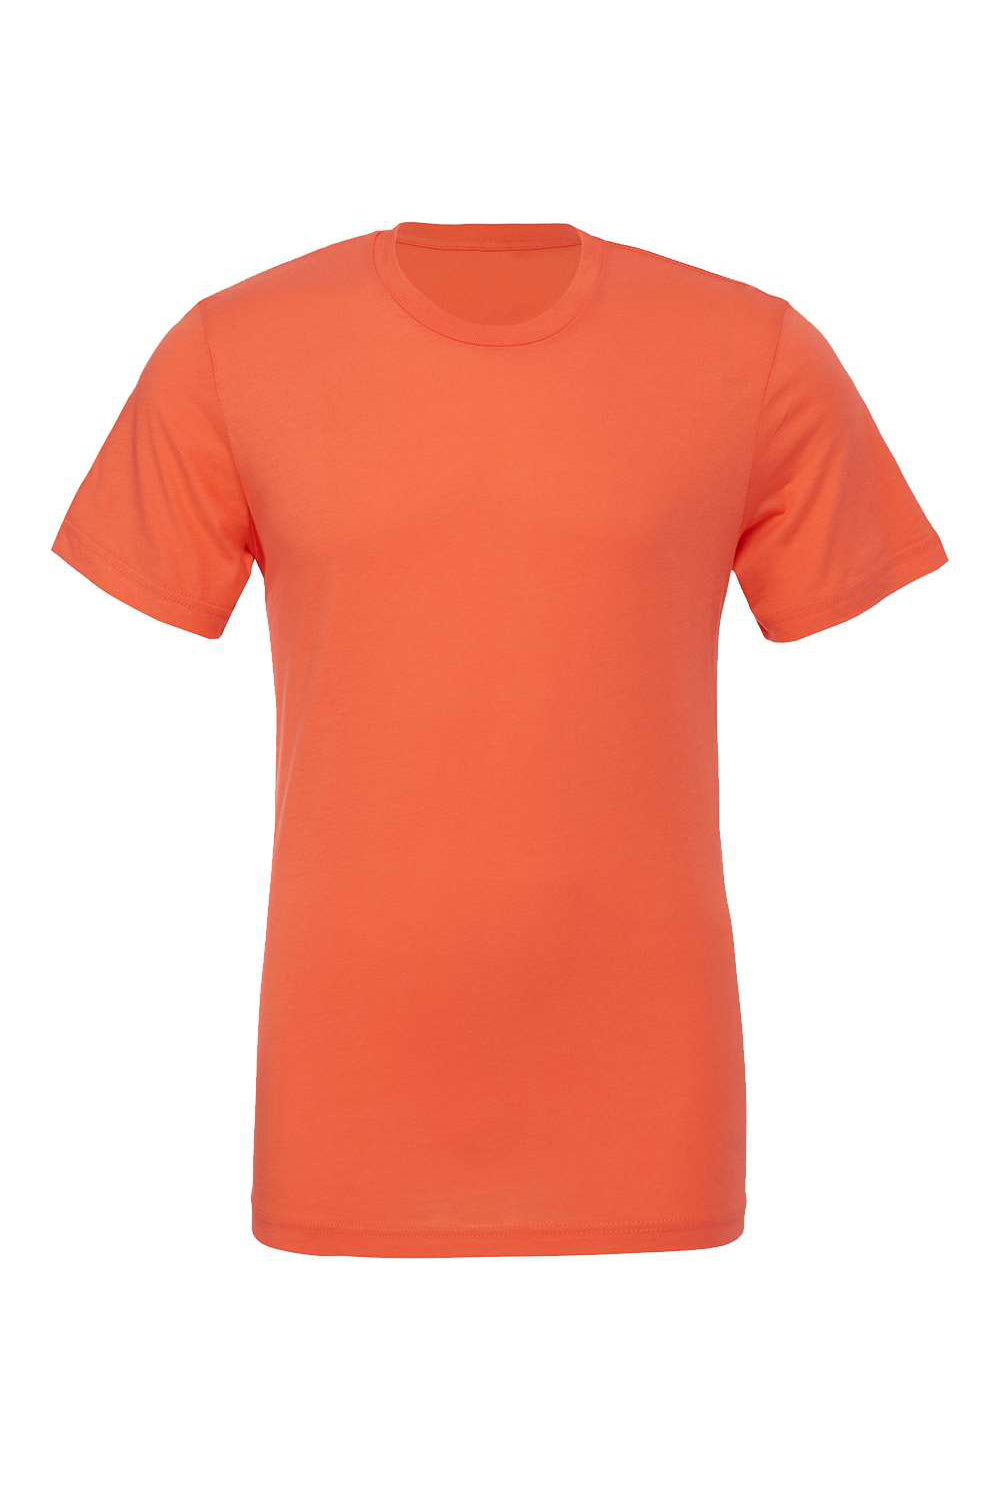 Bella + Canvas BC3001/3001C Mens Jersey Short Sleeve Crewneck T-Shirt Coral Flat Front